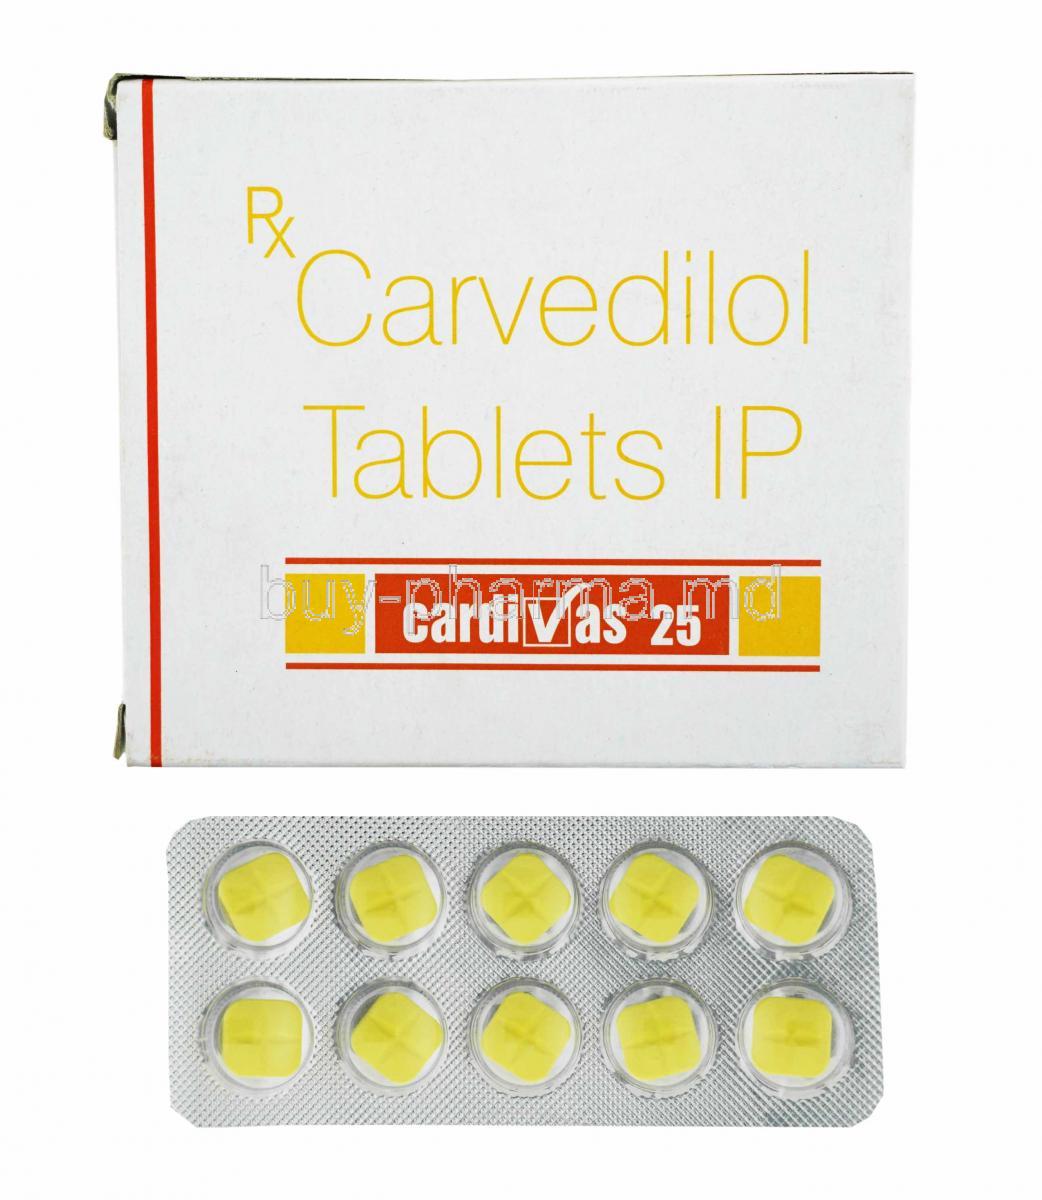 Cardivas, Carvedilol 25mg box and tablets